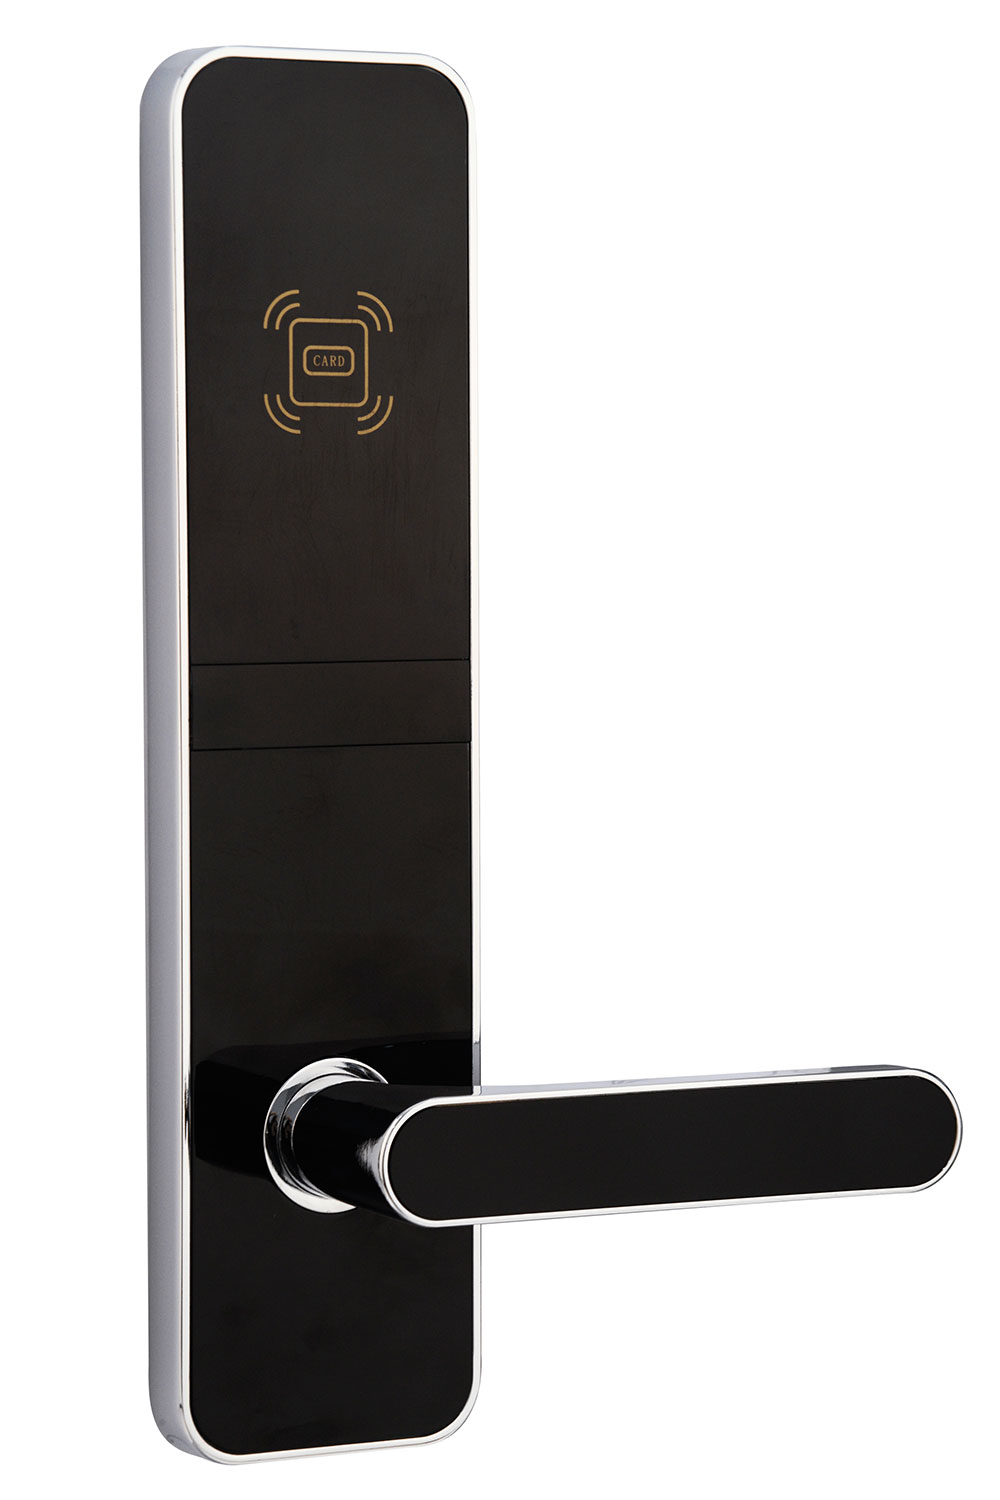 New type hotel motel intelligent RFID card door locks